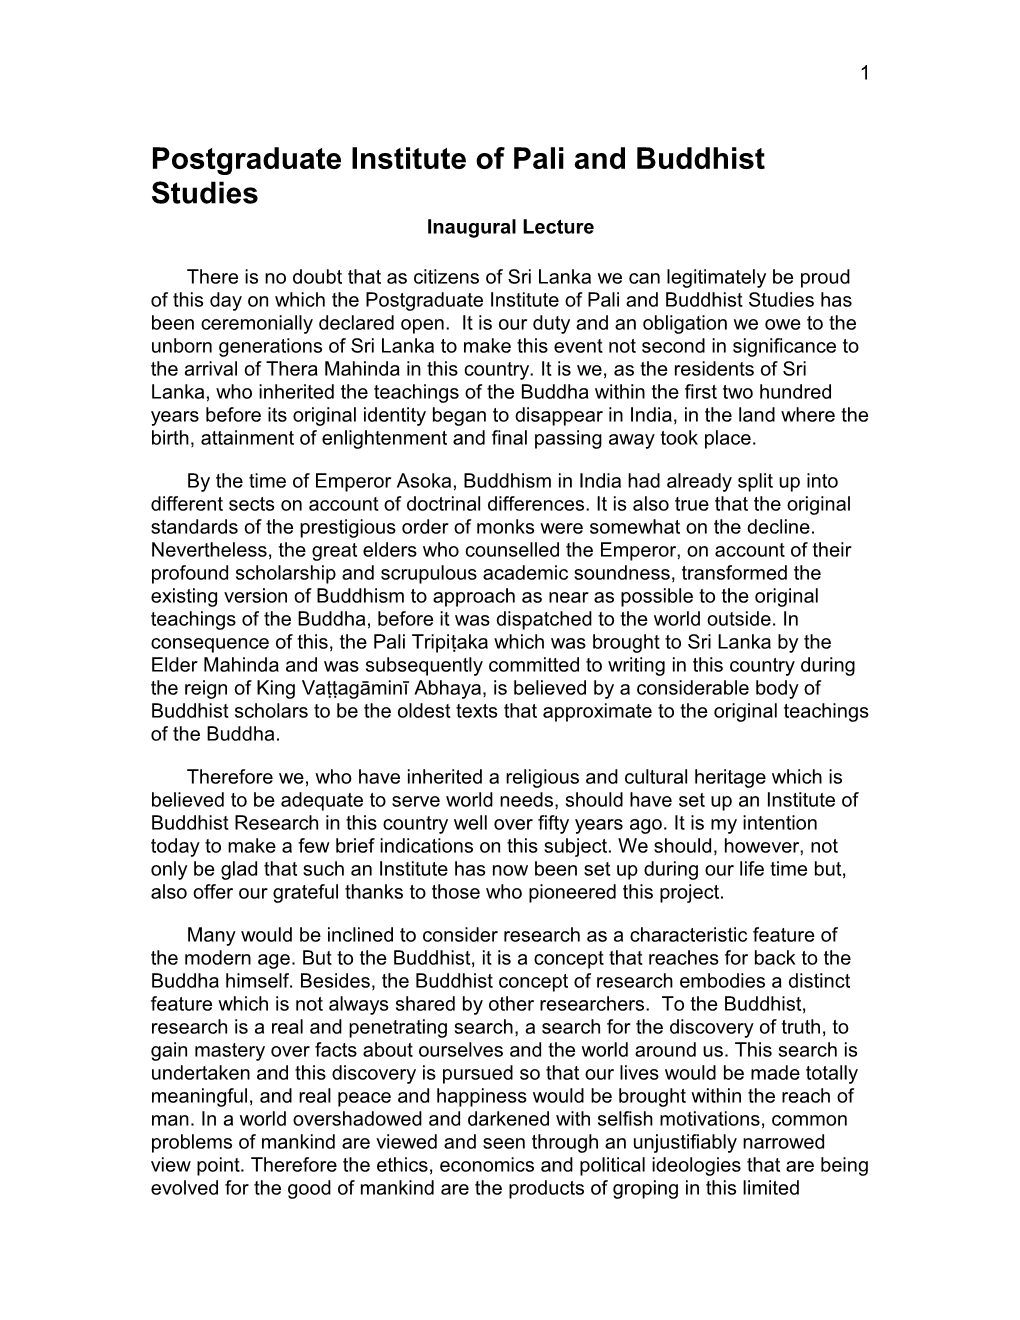 Postgraduate Institute of Pali and Buddhist Studies -Inaugural Lecture